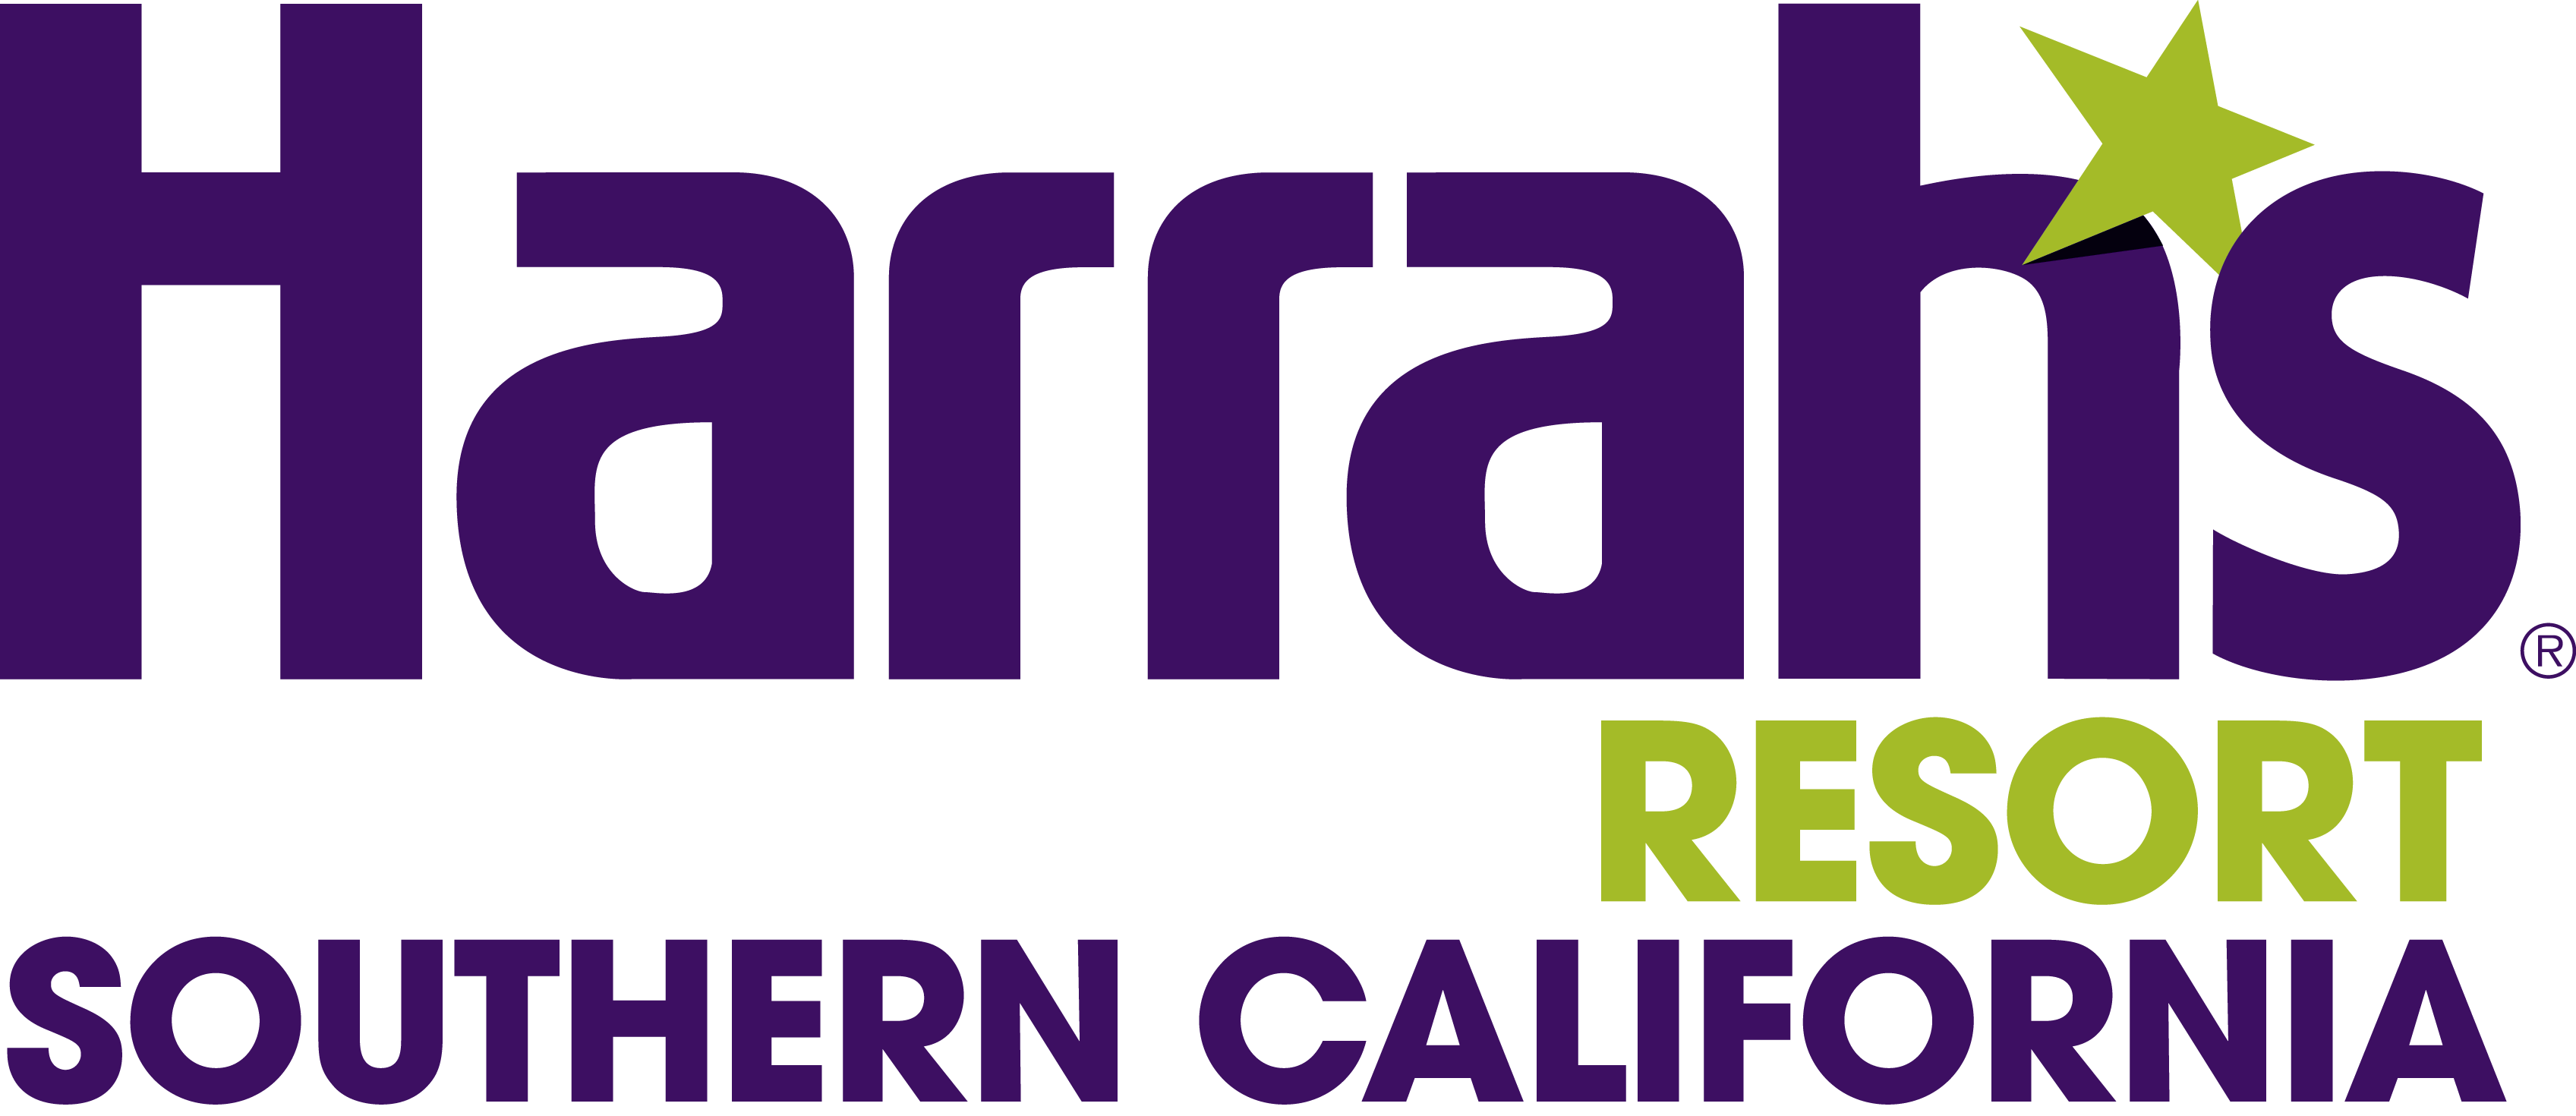 Harrahs Casino Logo - File:Harrah's Resort Southern California casino logo.png - Wikimedia ...